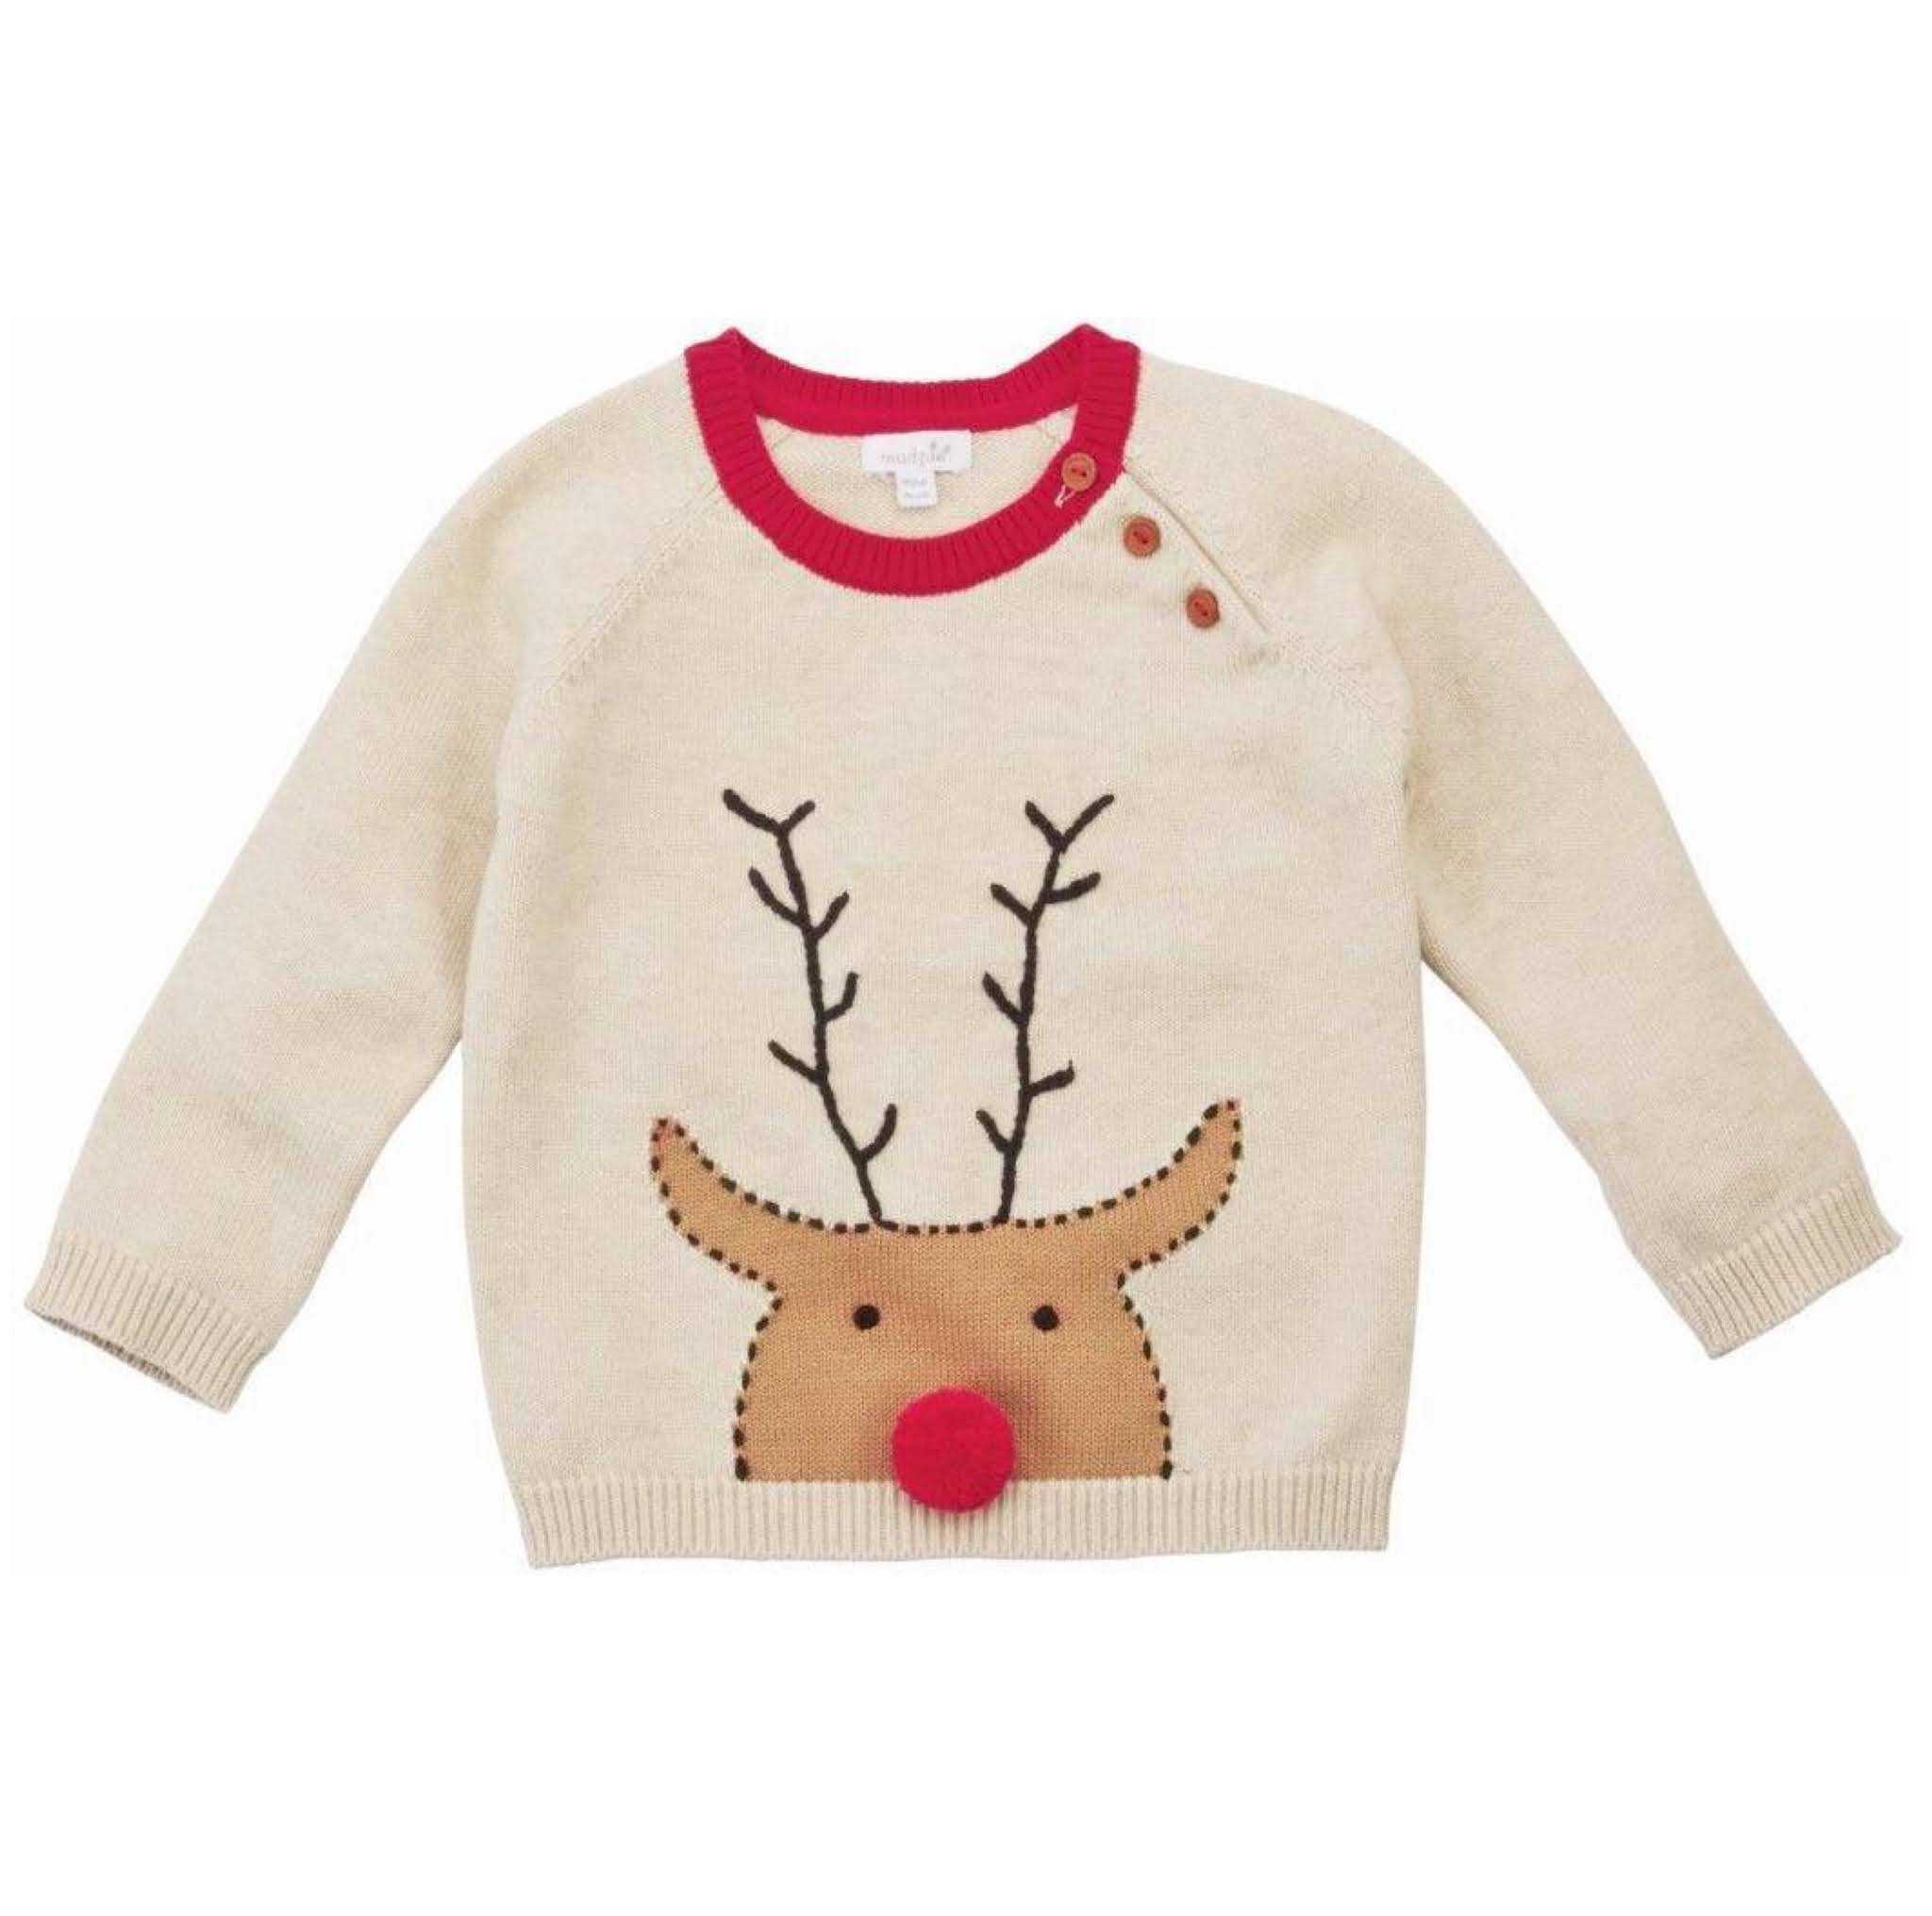 Kids Christmas Reindeer Holiday Sweater from Mud Pie